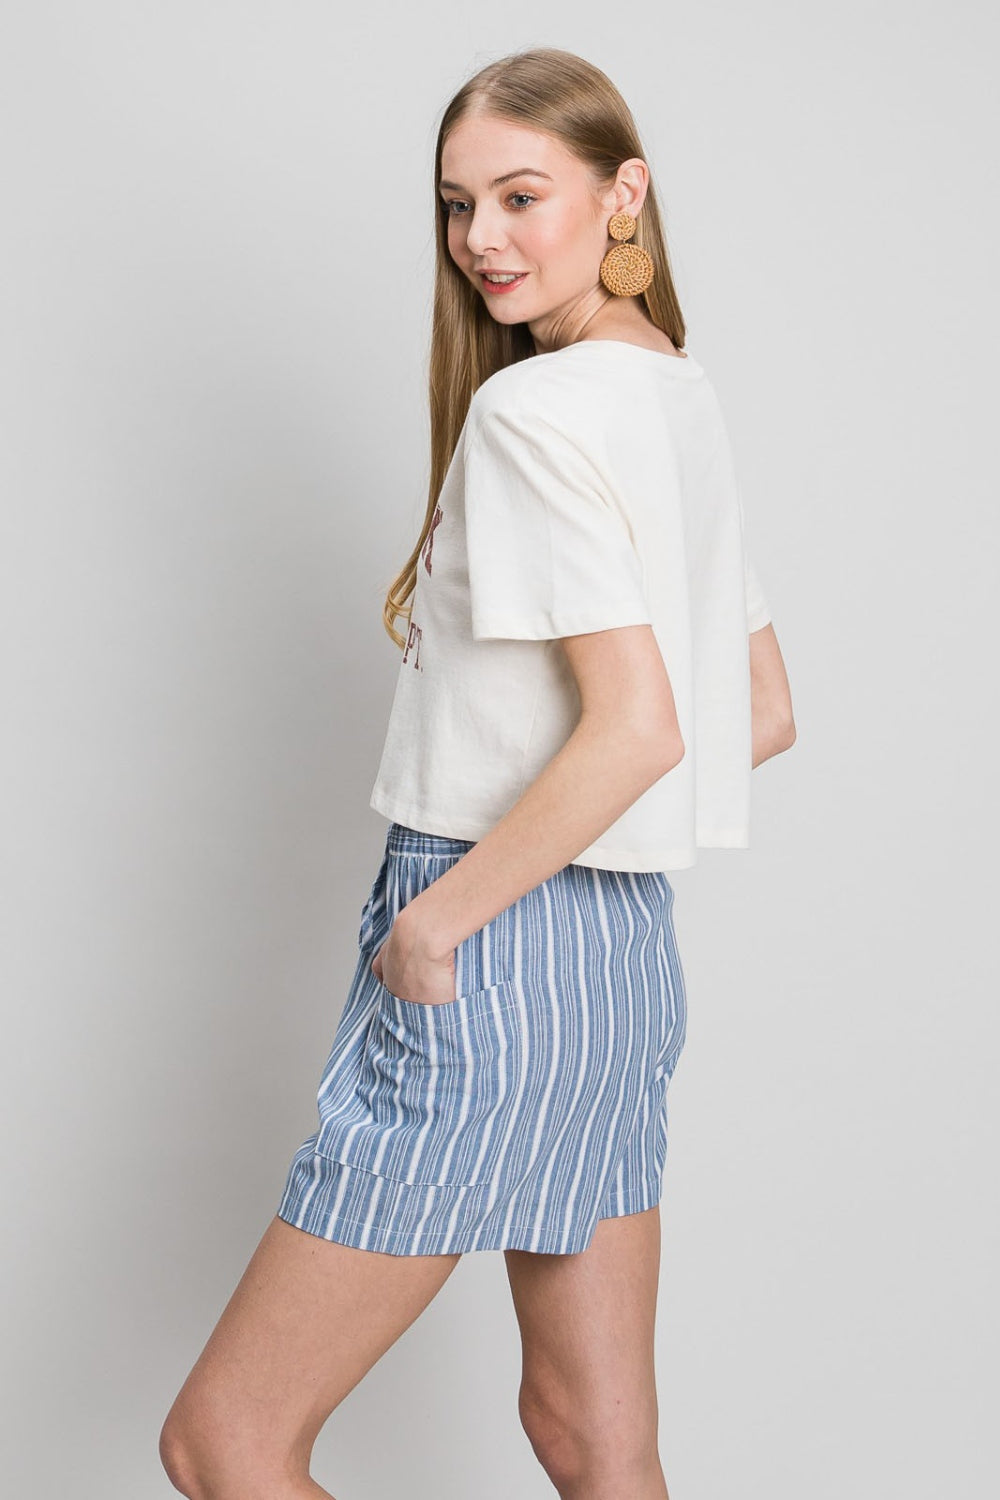 Cotton Bleu by Nu Label Yarn Dye Striped Shorts - Three Bears Boutique